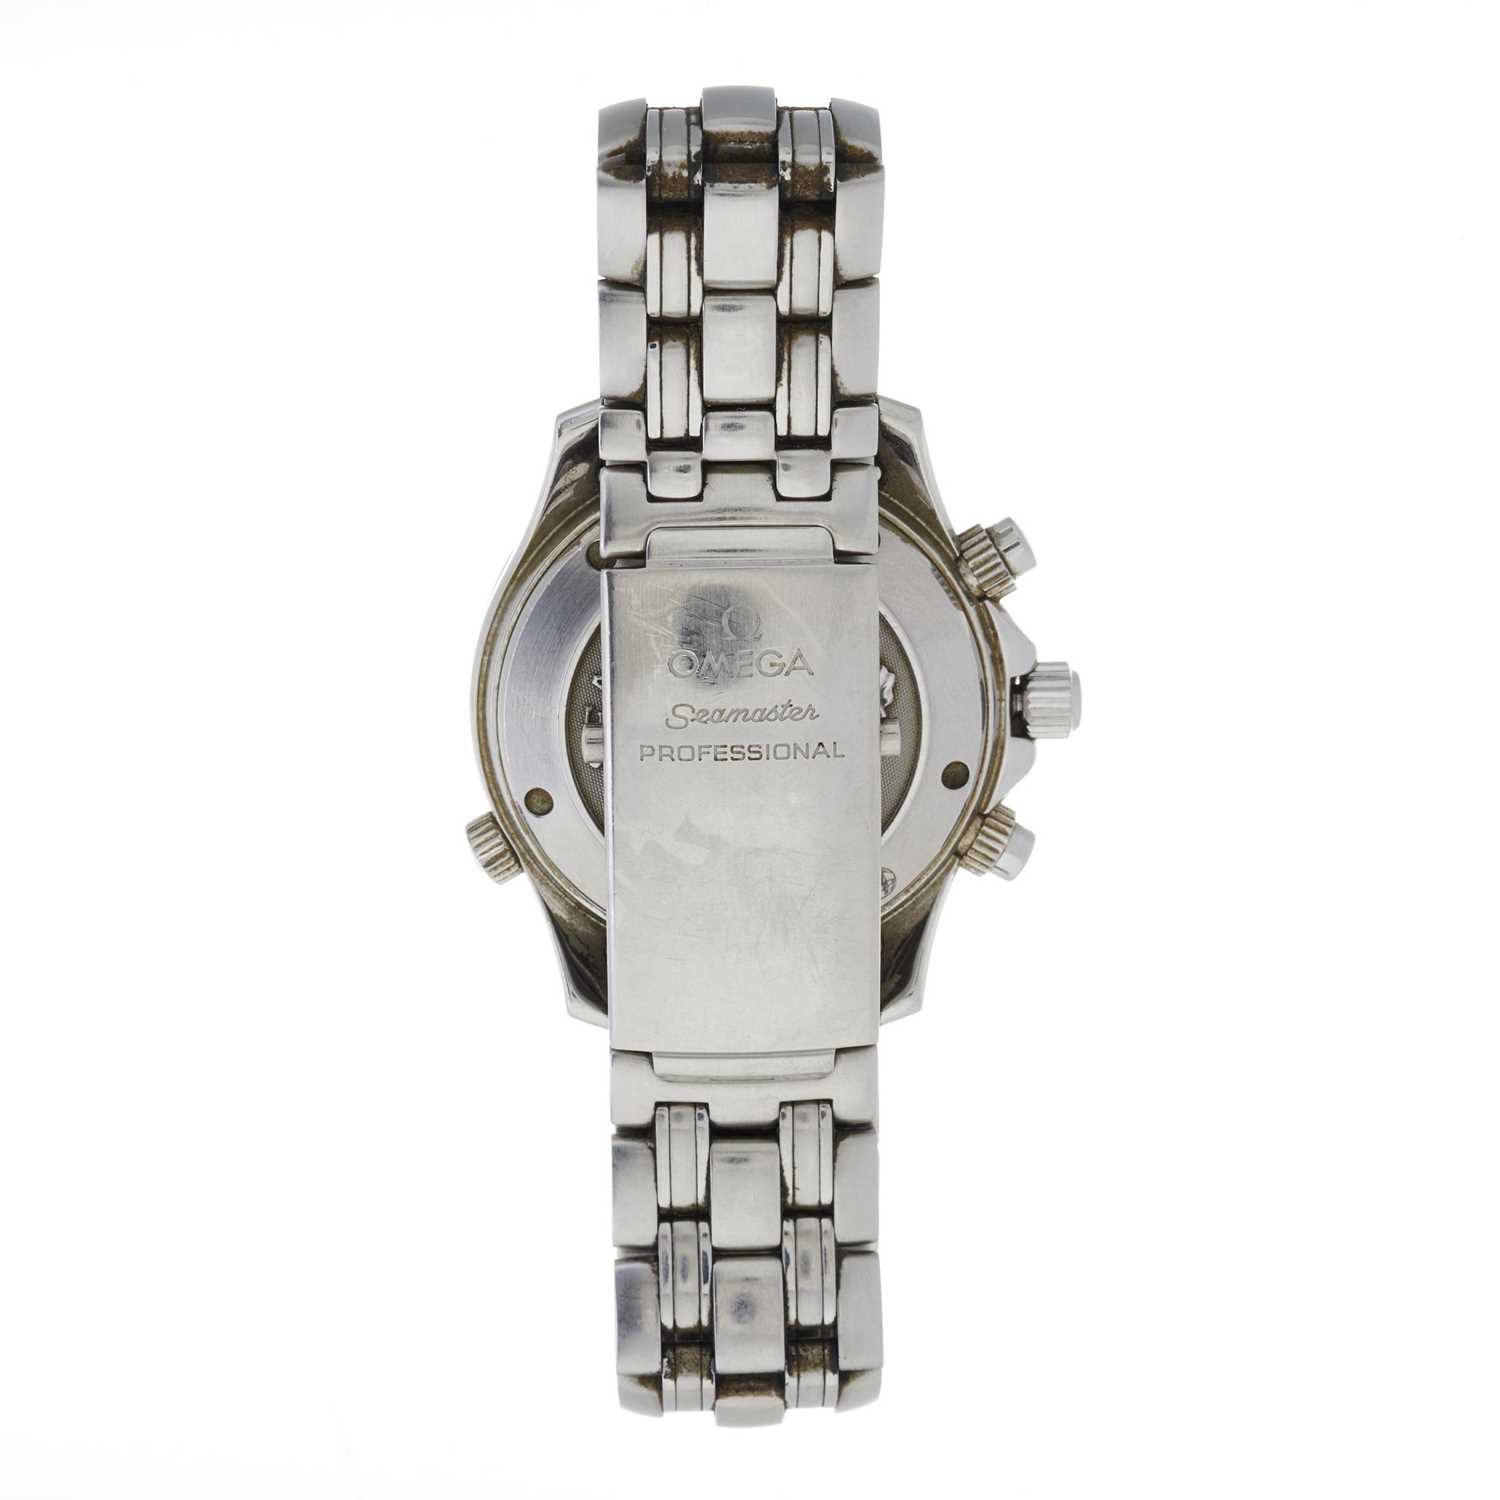 Omega, a Seamaster Professional chronograph bracelet watch - Image 2 of 3